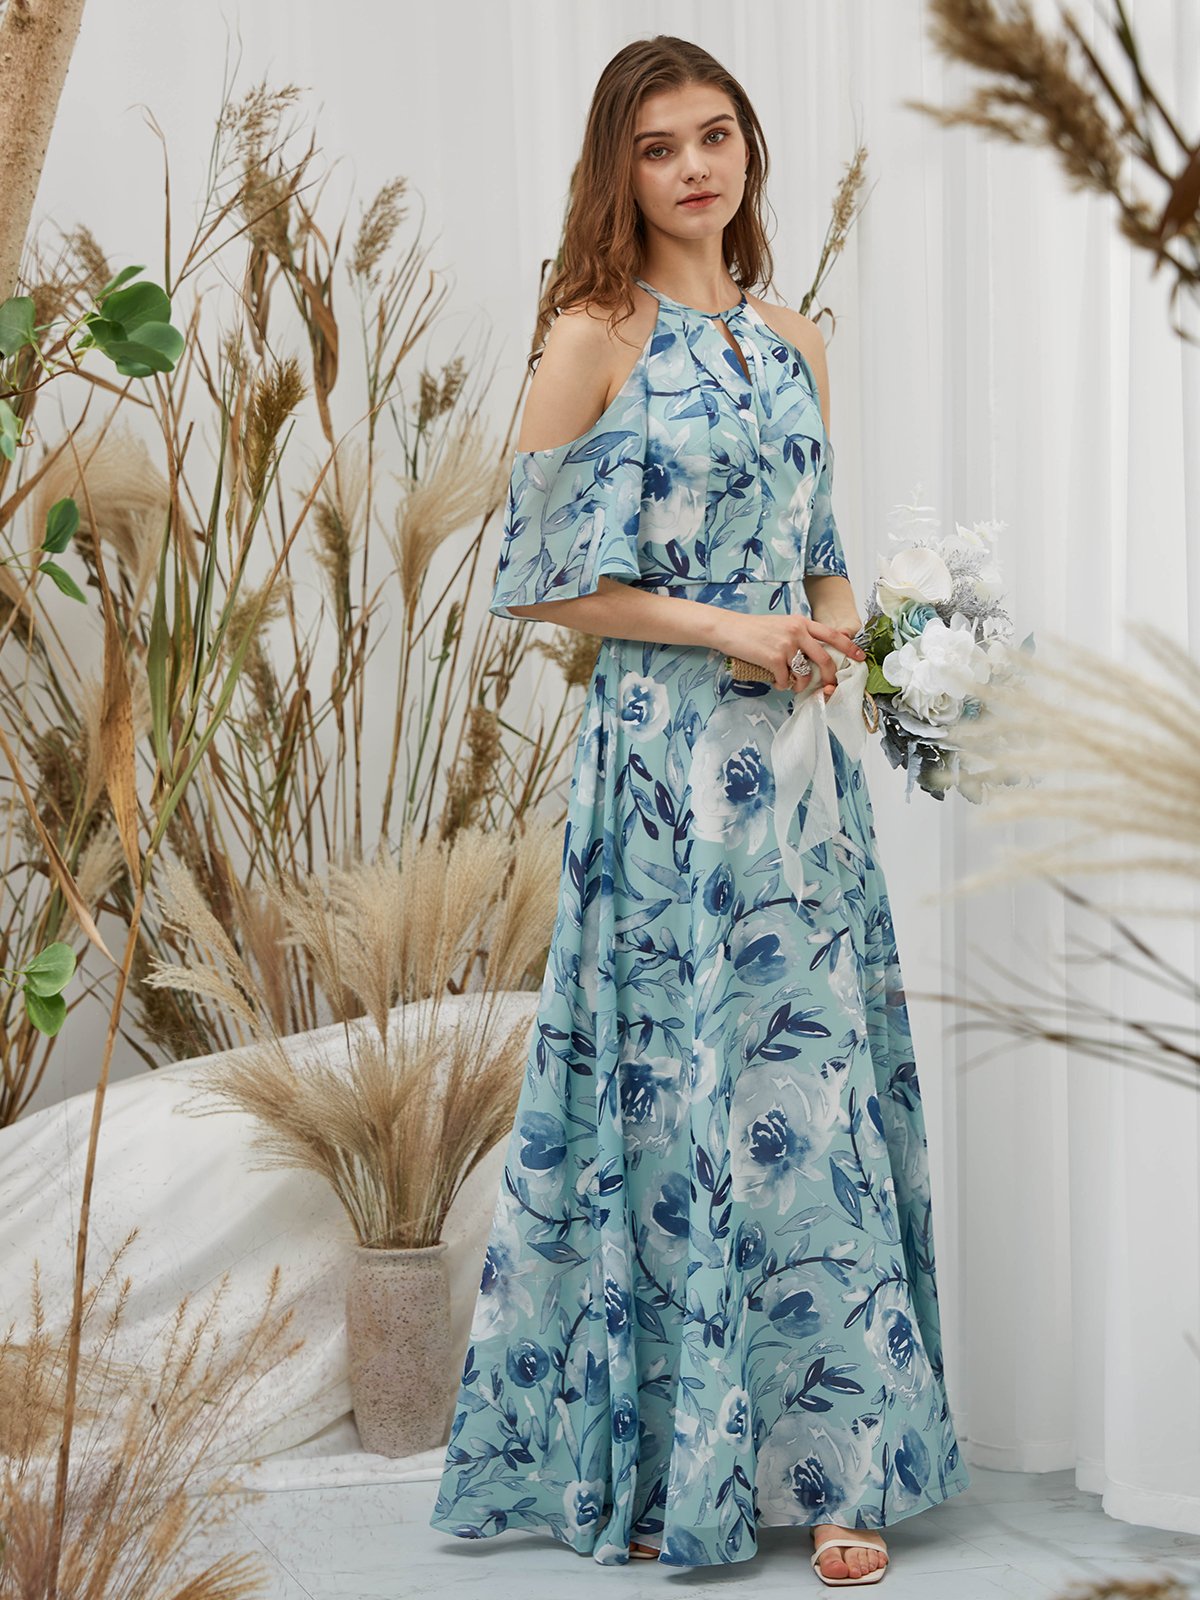 Halter Off the Shoulder Chiffon Print Floral Ivory Steel Blue Floor Length Formal Gown